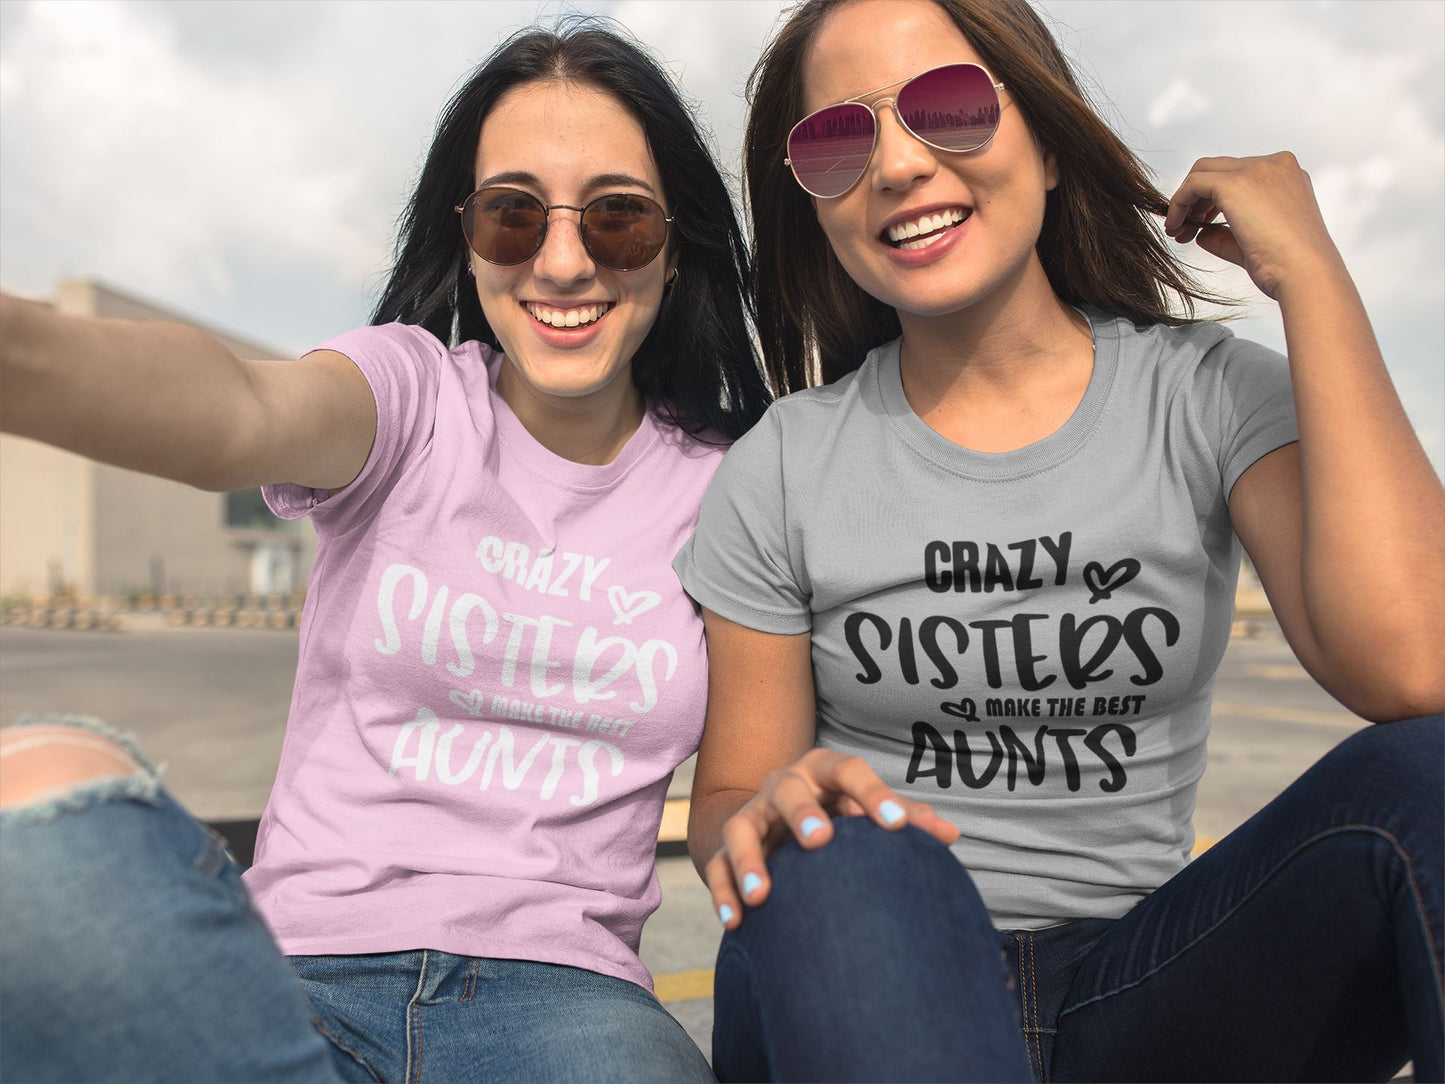 Crazy sisters make the best Aunts T-shirt